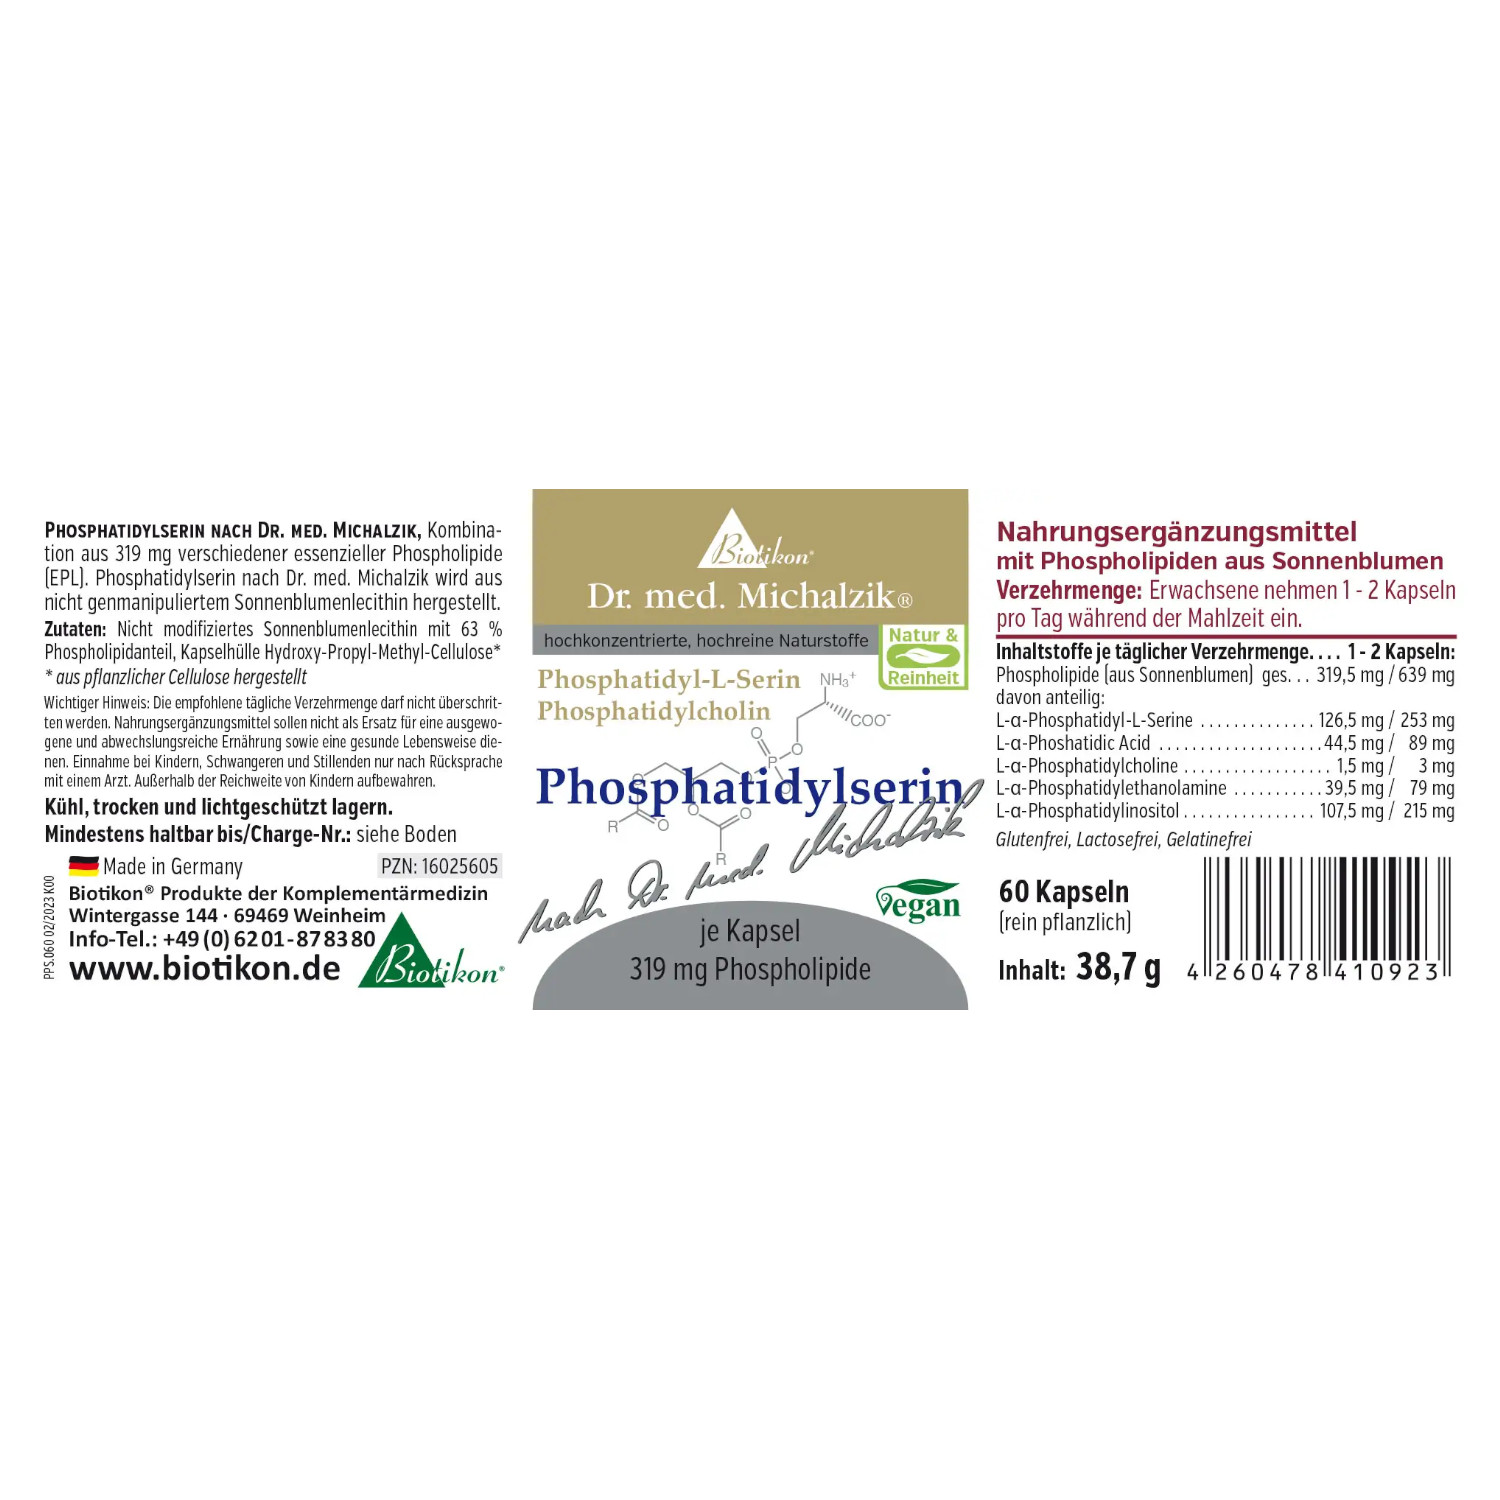 Phosphatidylserin von Biotikon - Etikett